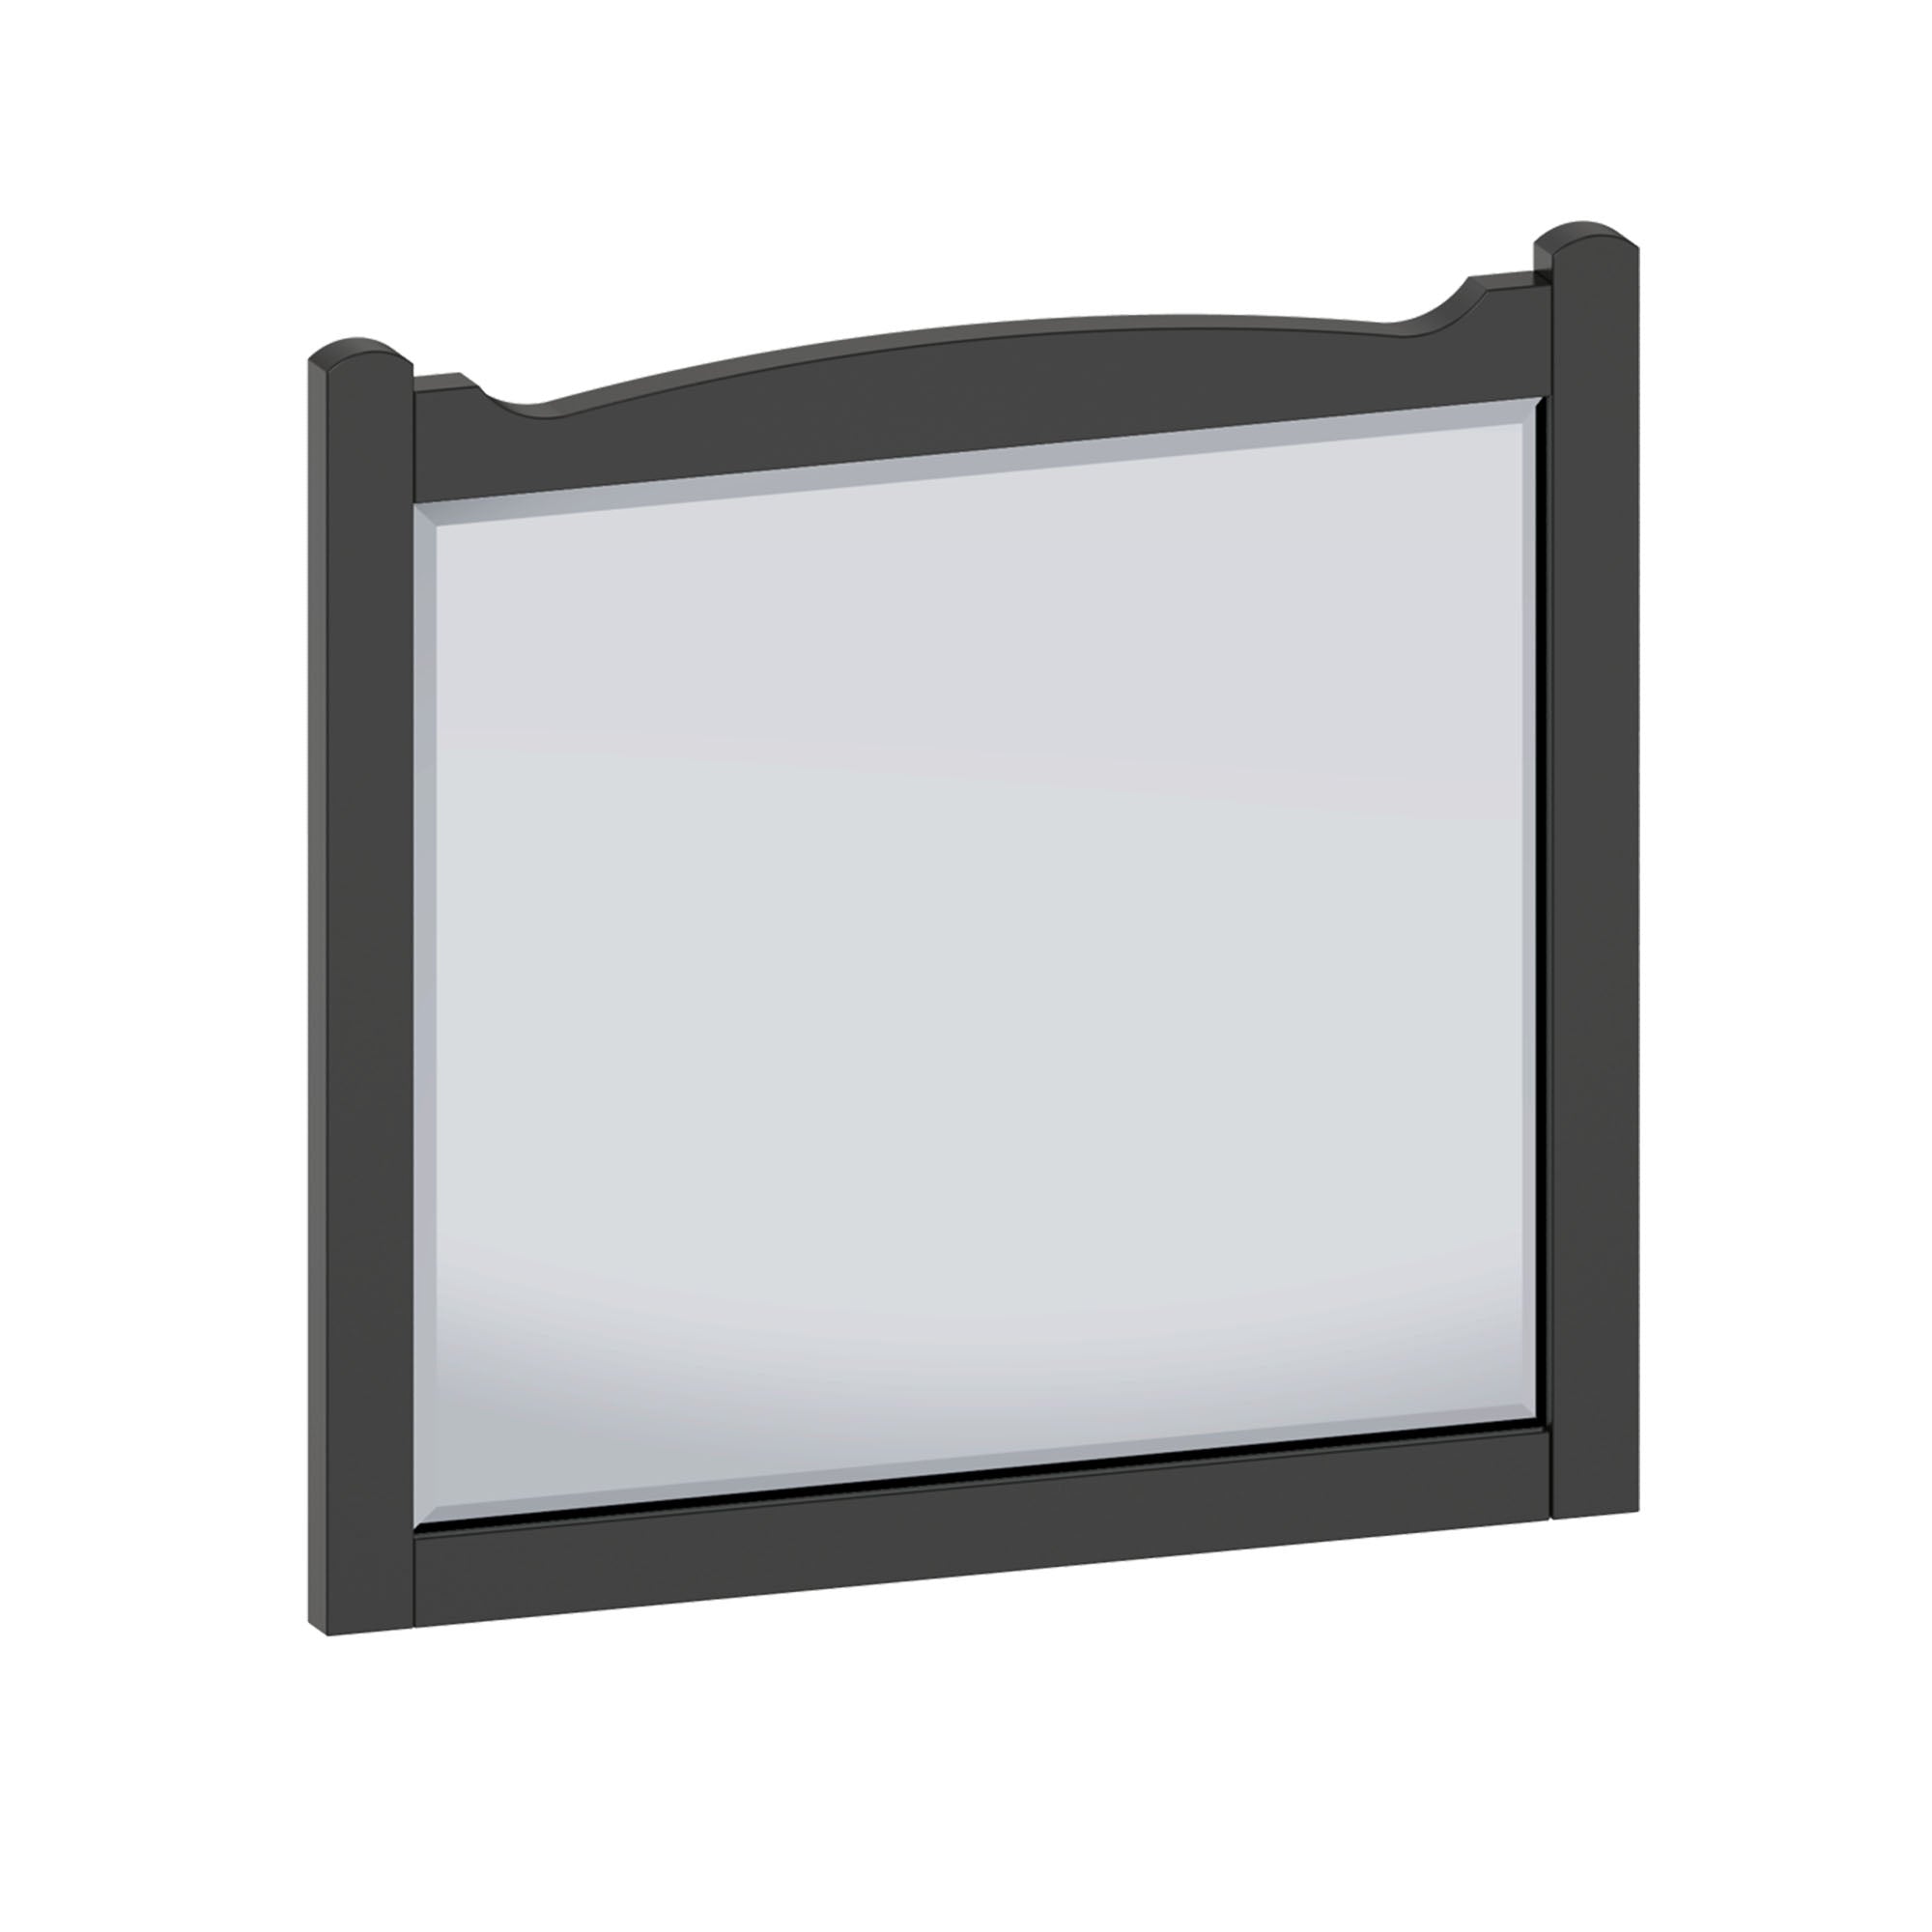 burlington guild 600 framed bathroom mirror ashbee grey